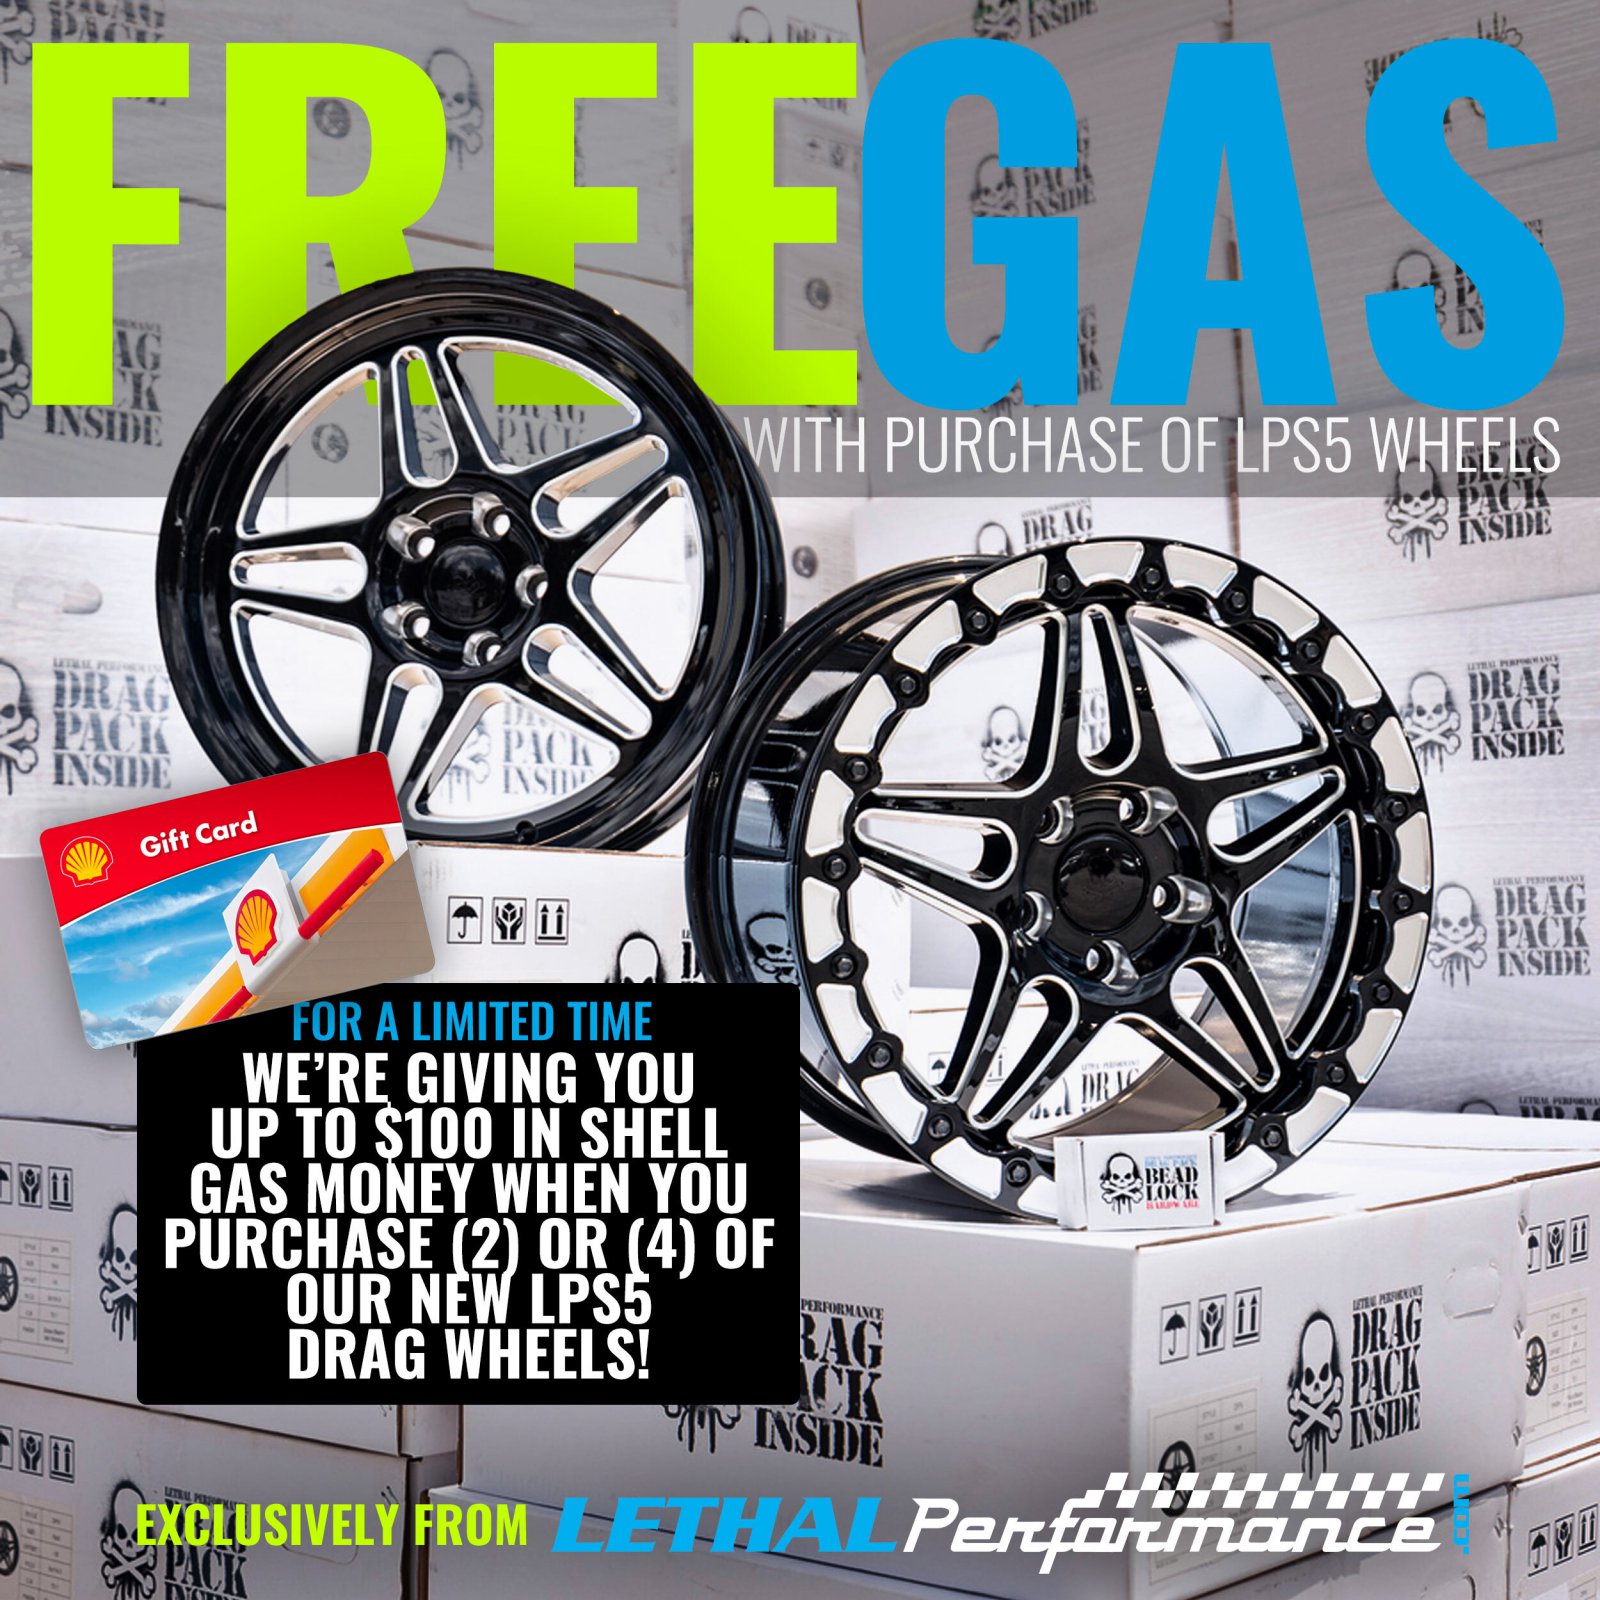 freegas_wheels_1x1.jpg